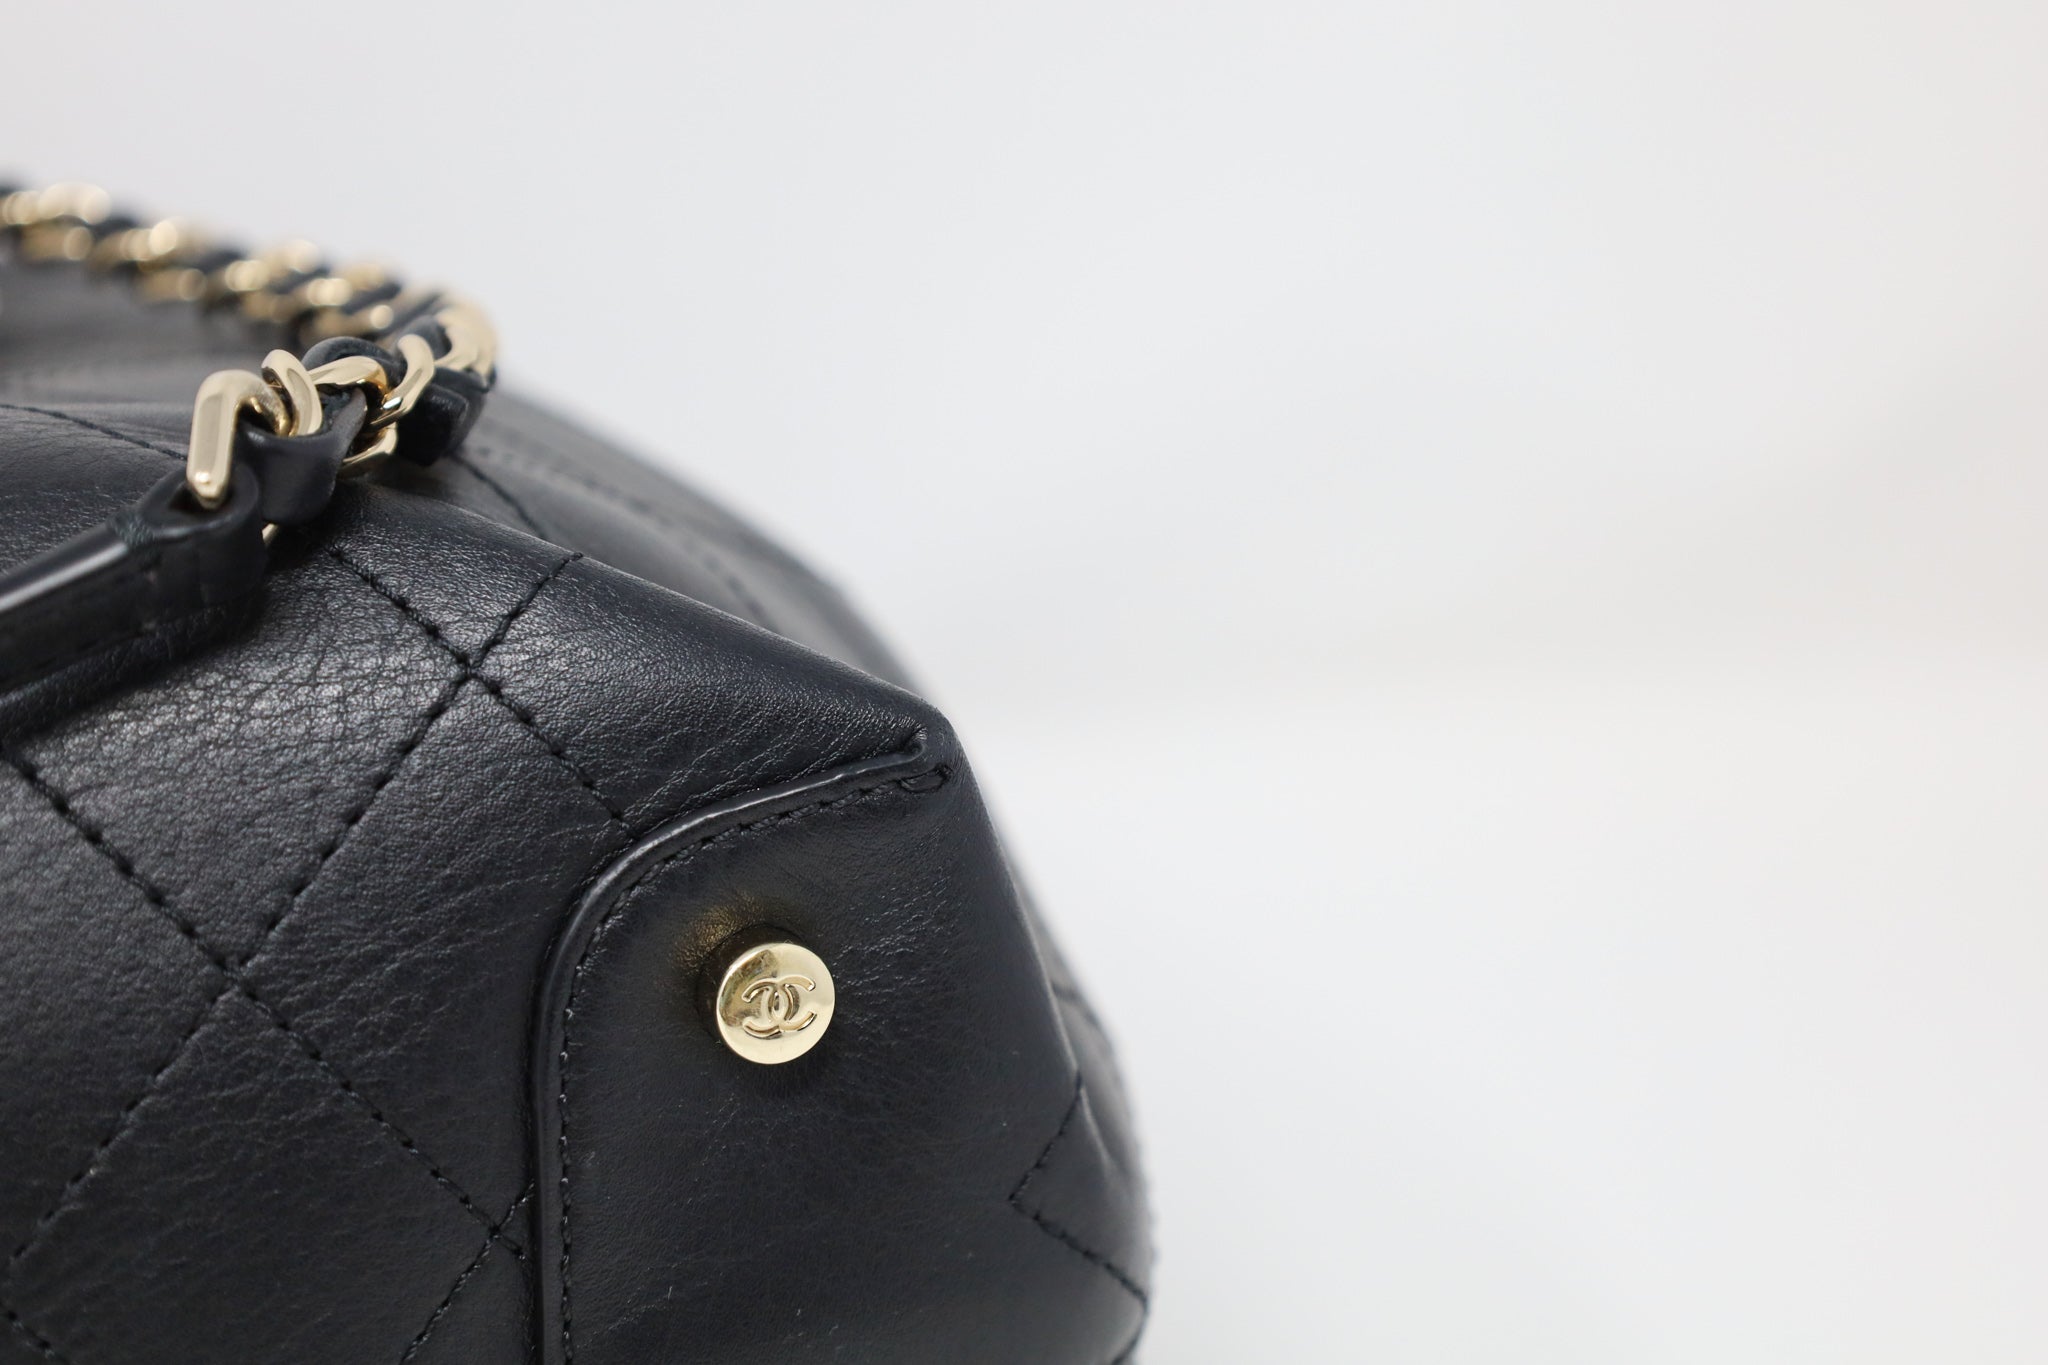 Chanel, Inc. Chanel Mini shopping bag, Shiny aged calfskin & gold-tone metal,  black — Fashion